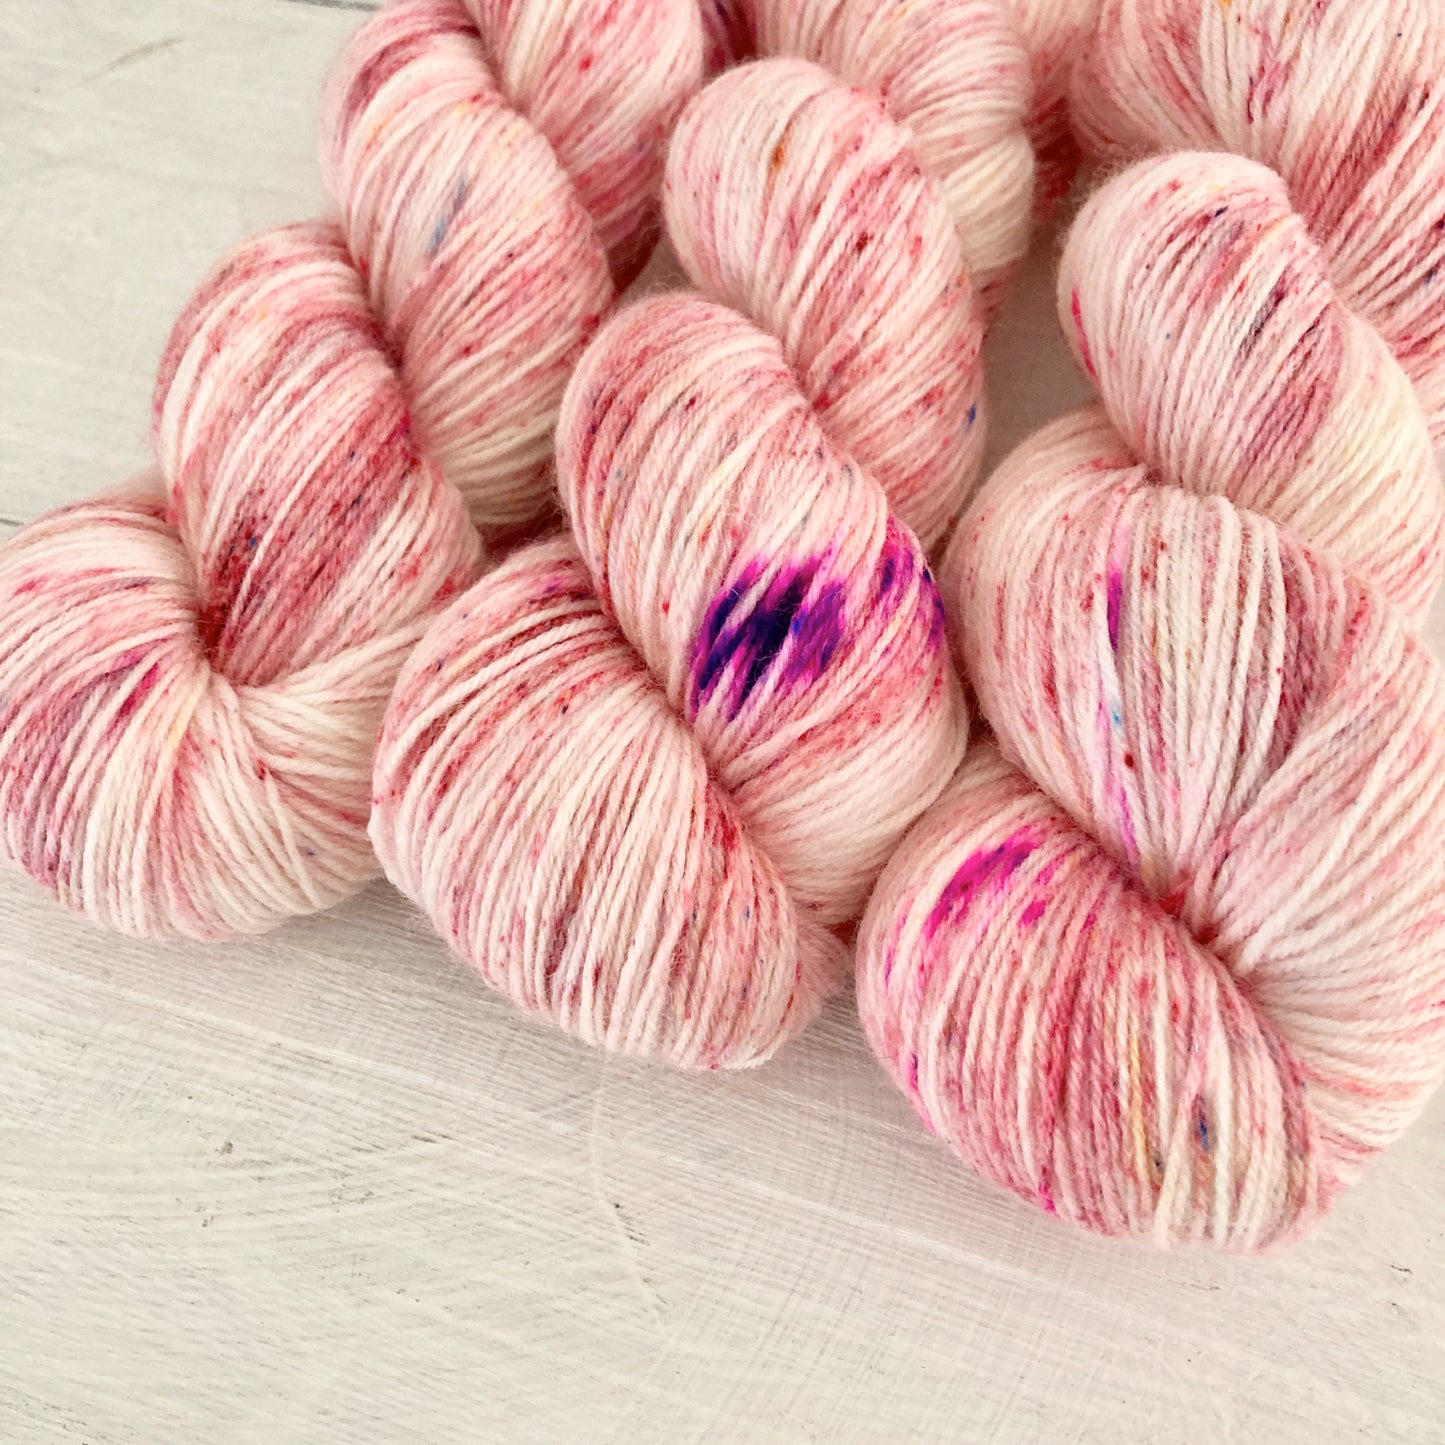 Hand-dyed yarn No.235 sock yarn "Tutti i fior" 